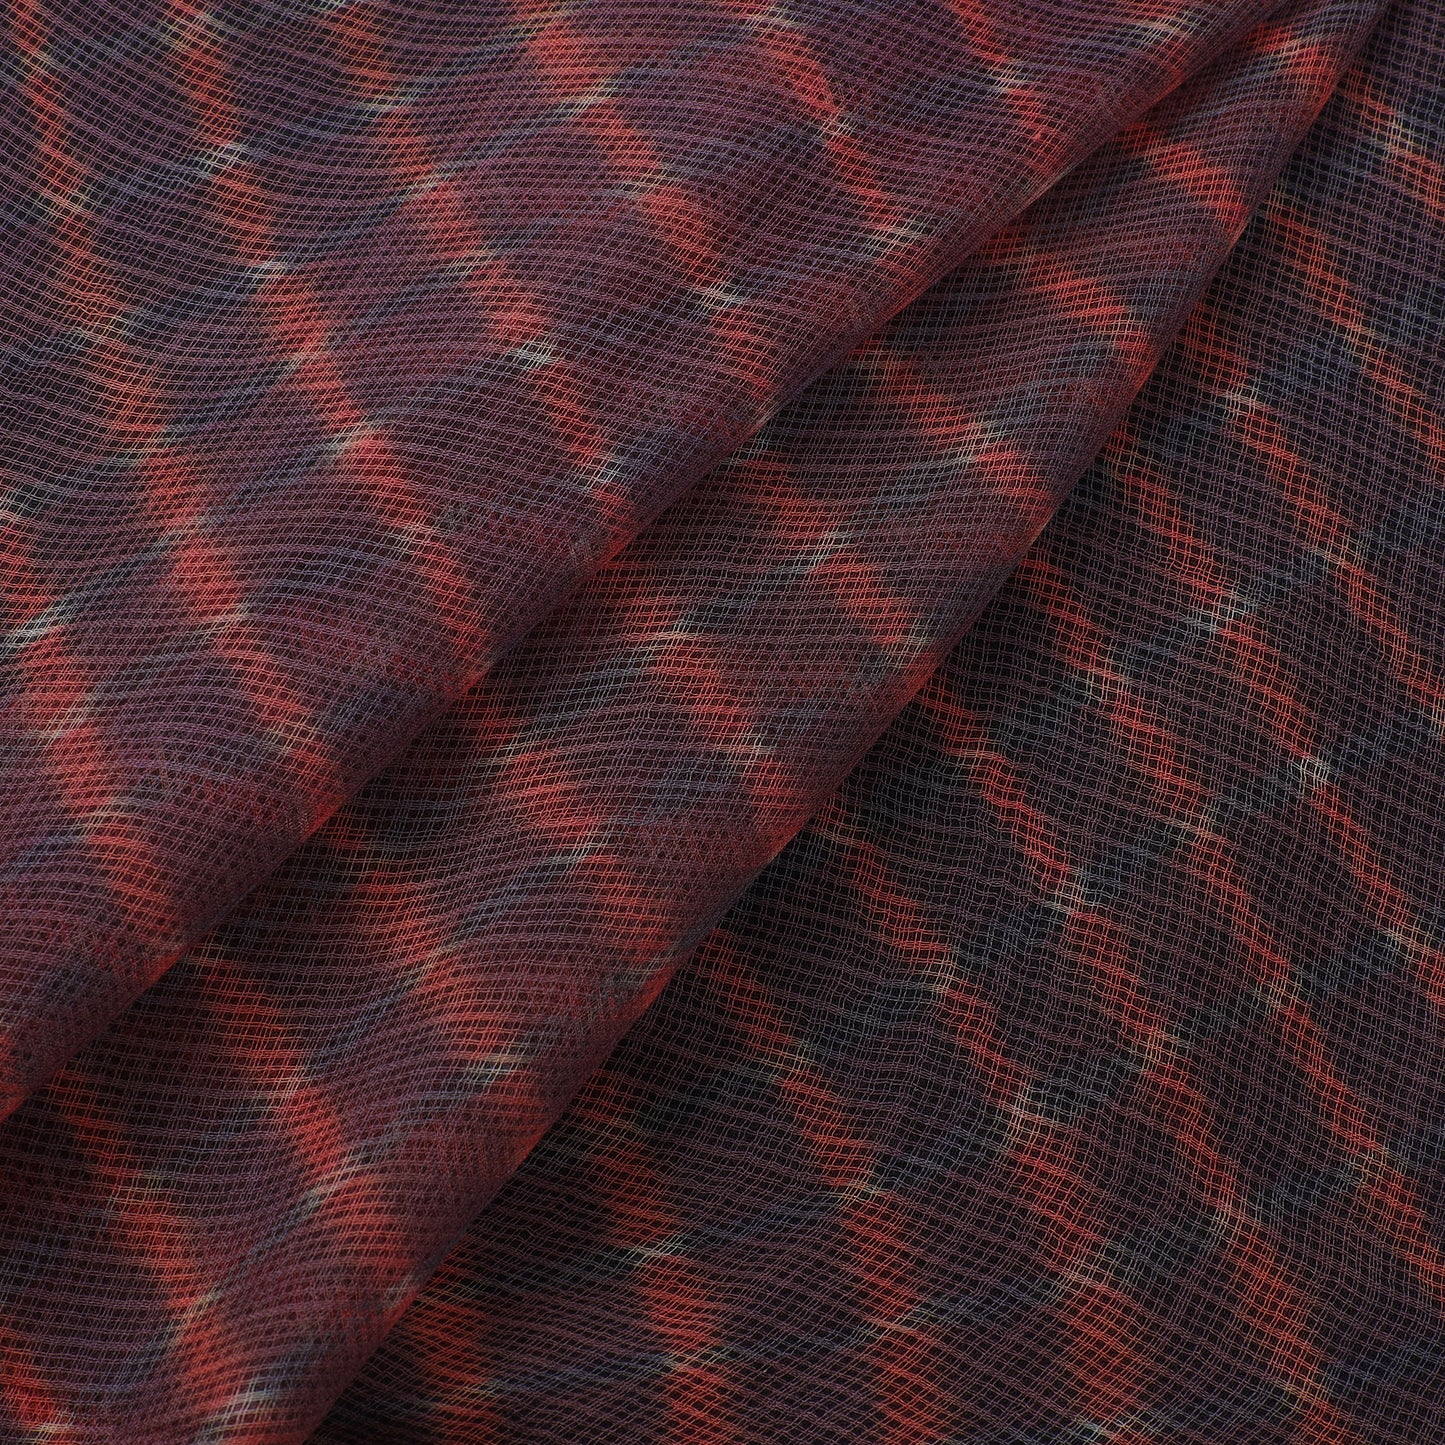 Maroon - Leheriya Tie-Dye Kota Doria Cotton Fabric 97